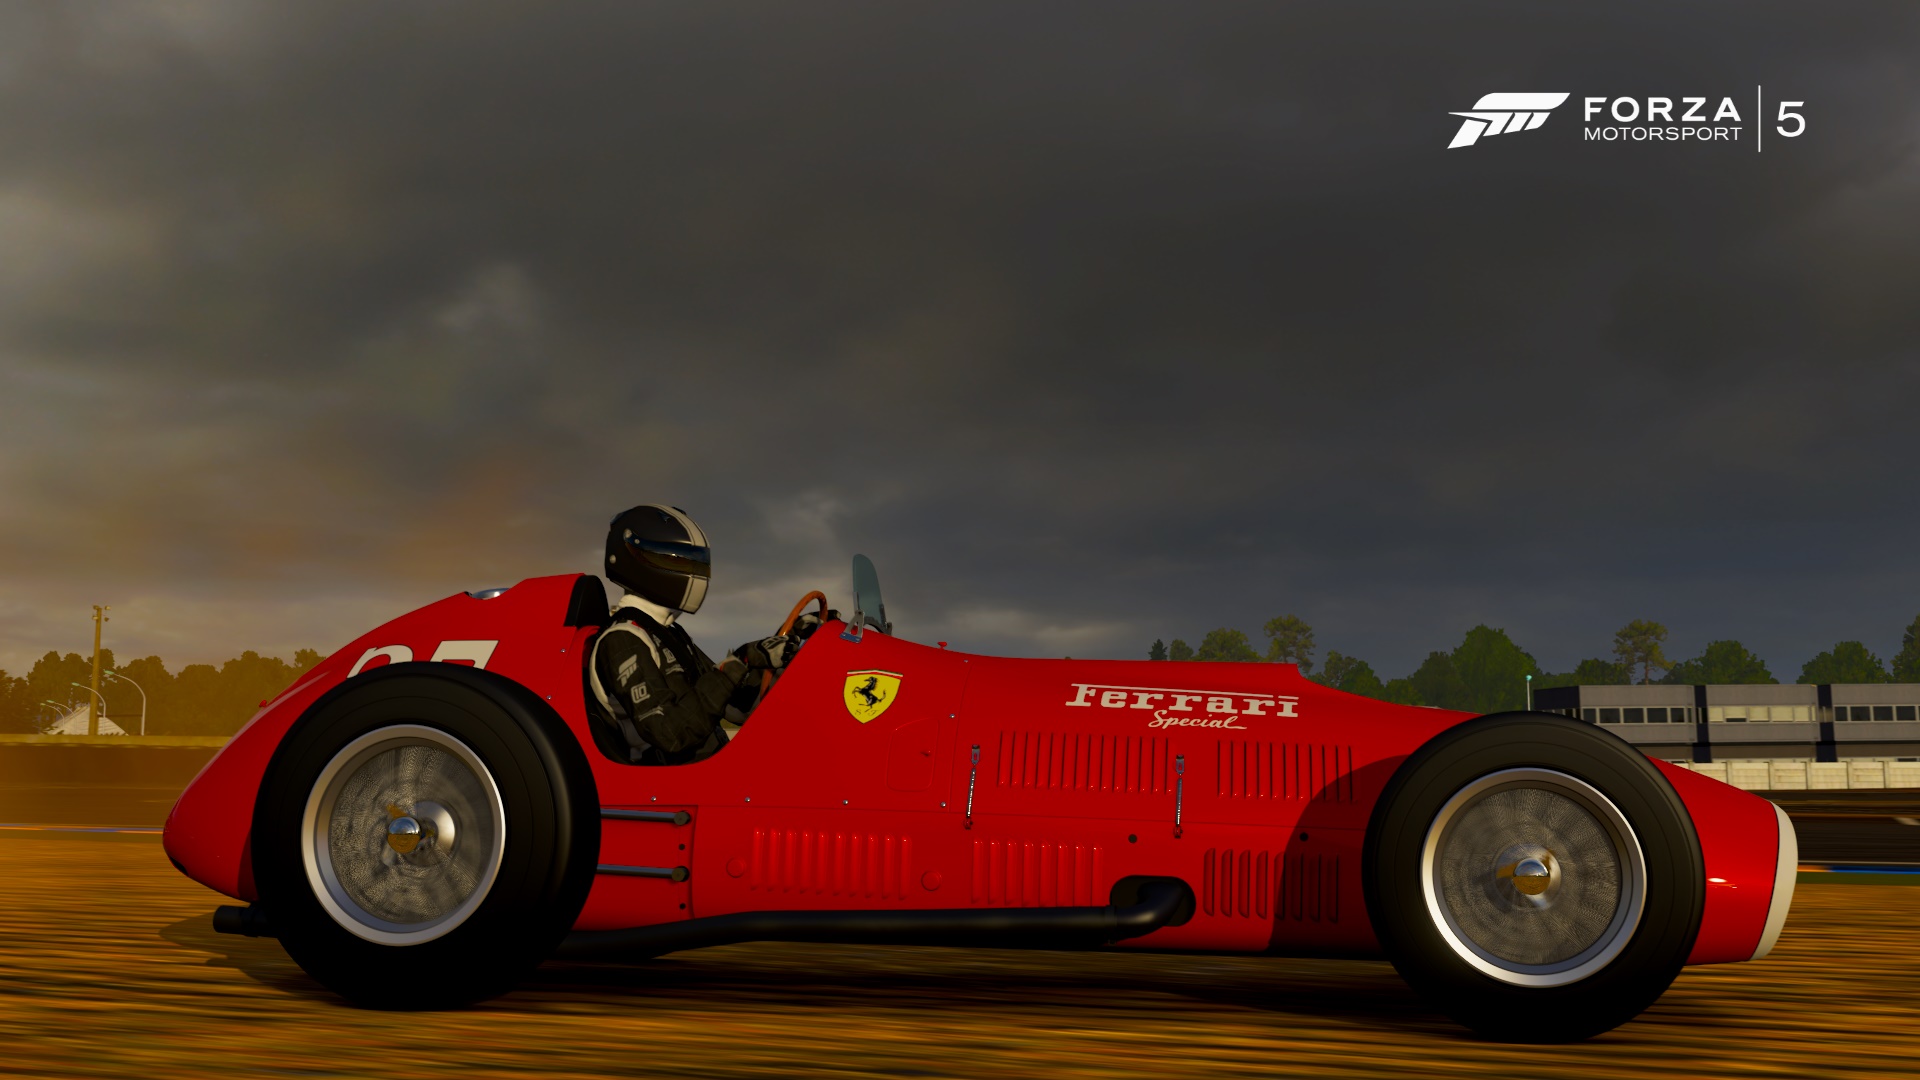 Ferrari Car Video Games Ferrari 375 Forza Motorsport Red Cars Forza Motorsport 5 Vehicle 1920x1080